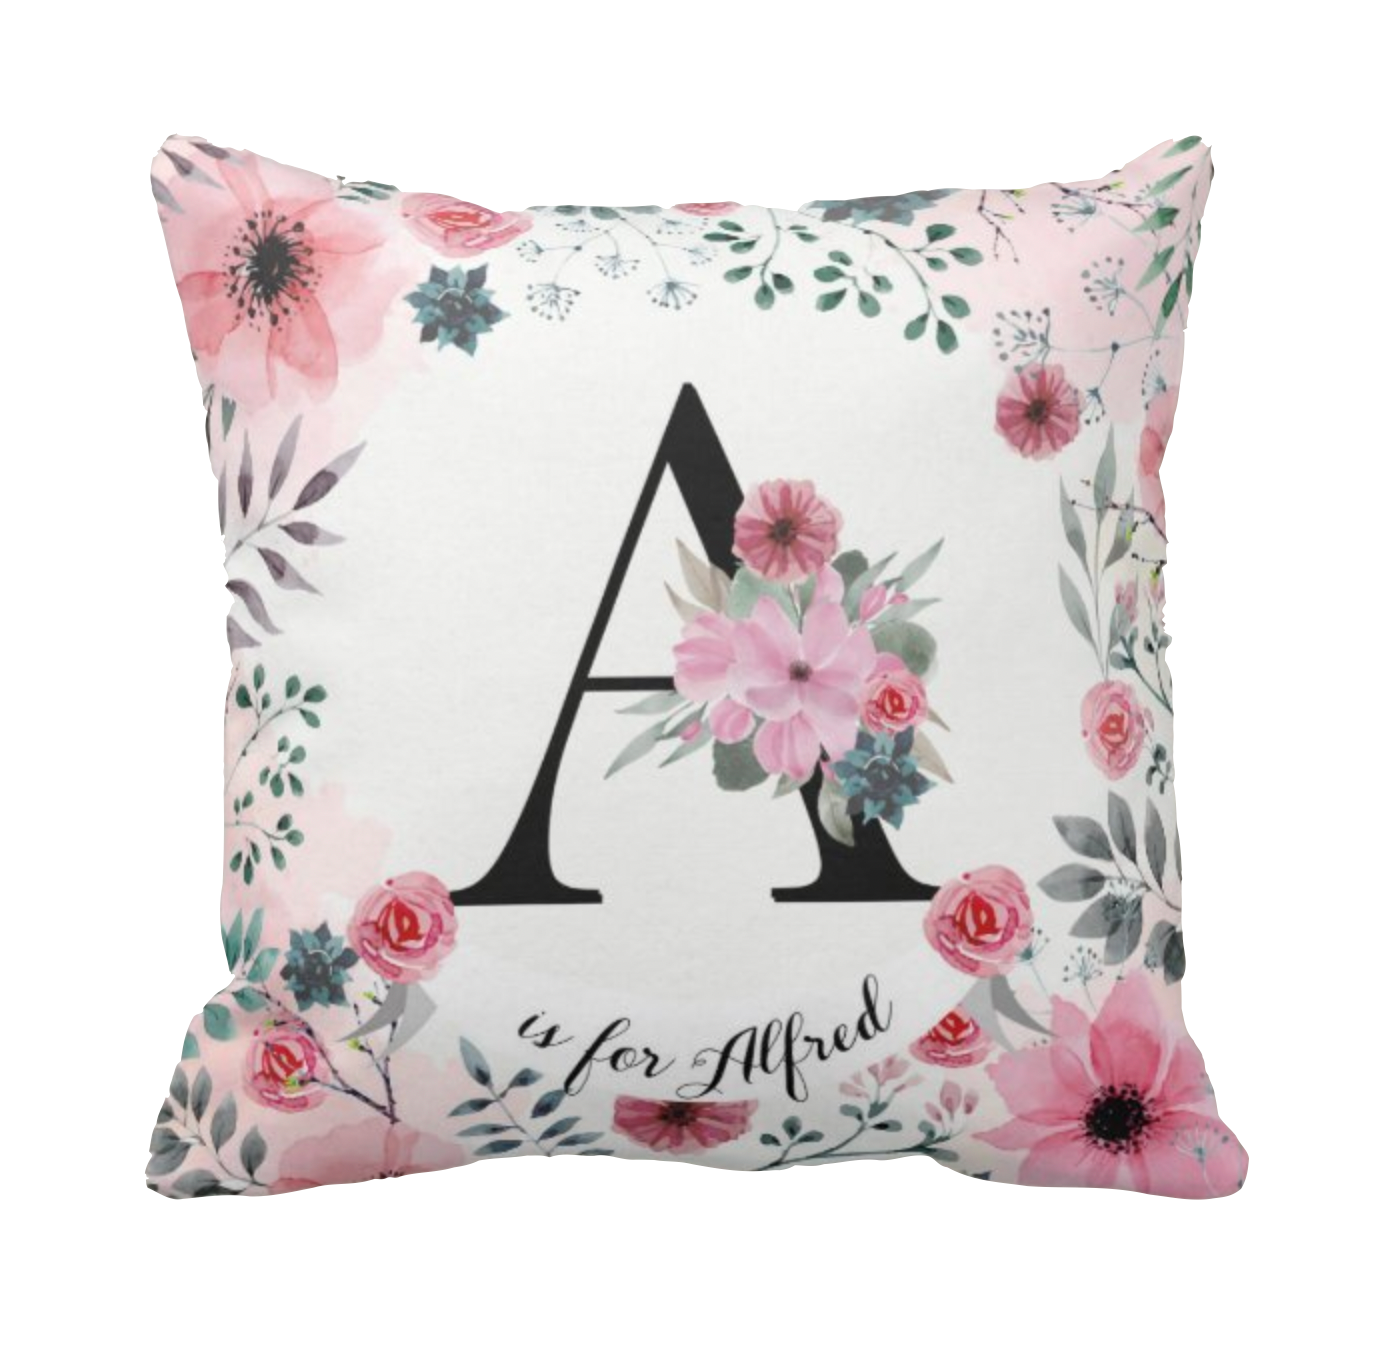 Pink Flower名字客製抱枕 Name Personlized Cushion-Pink Flower Design - HKGIFTFORU